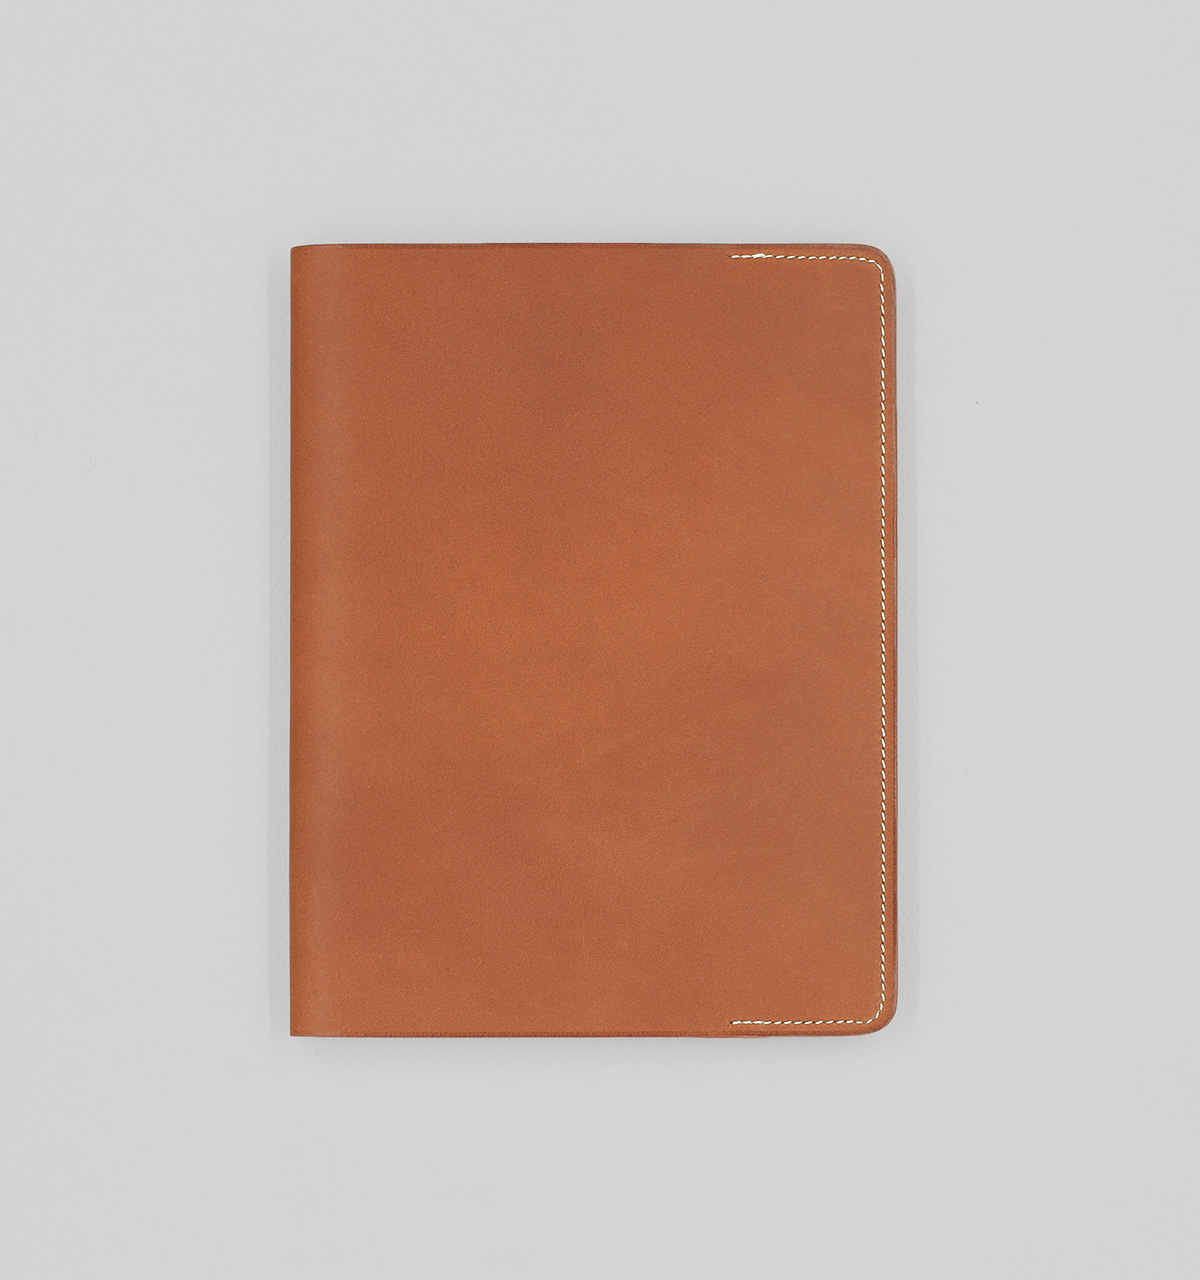 Protège cahier grand format couleur marron – Kibo